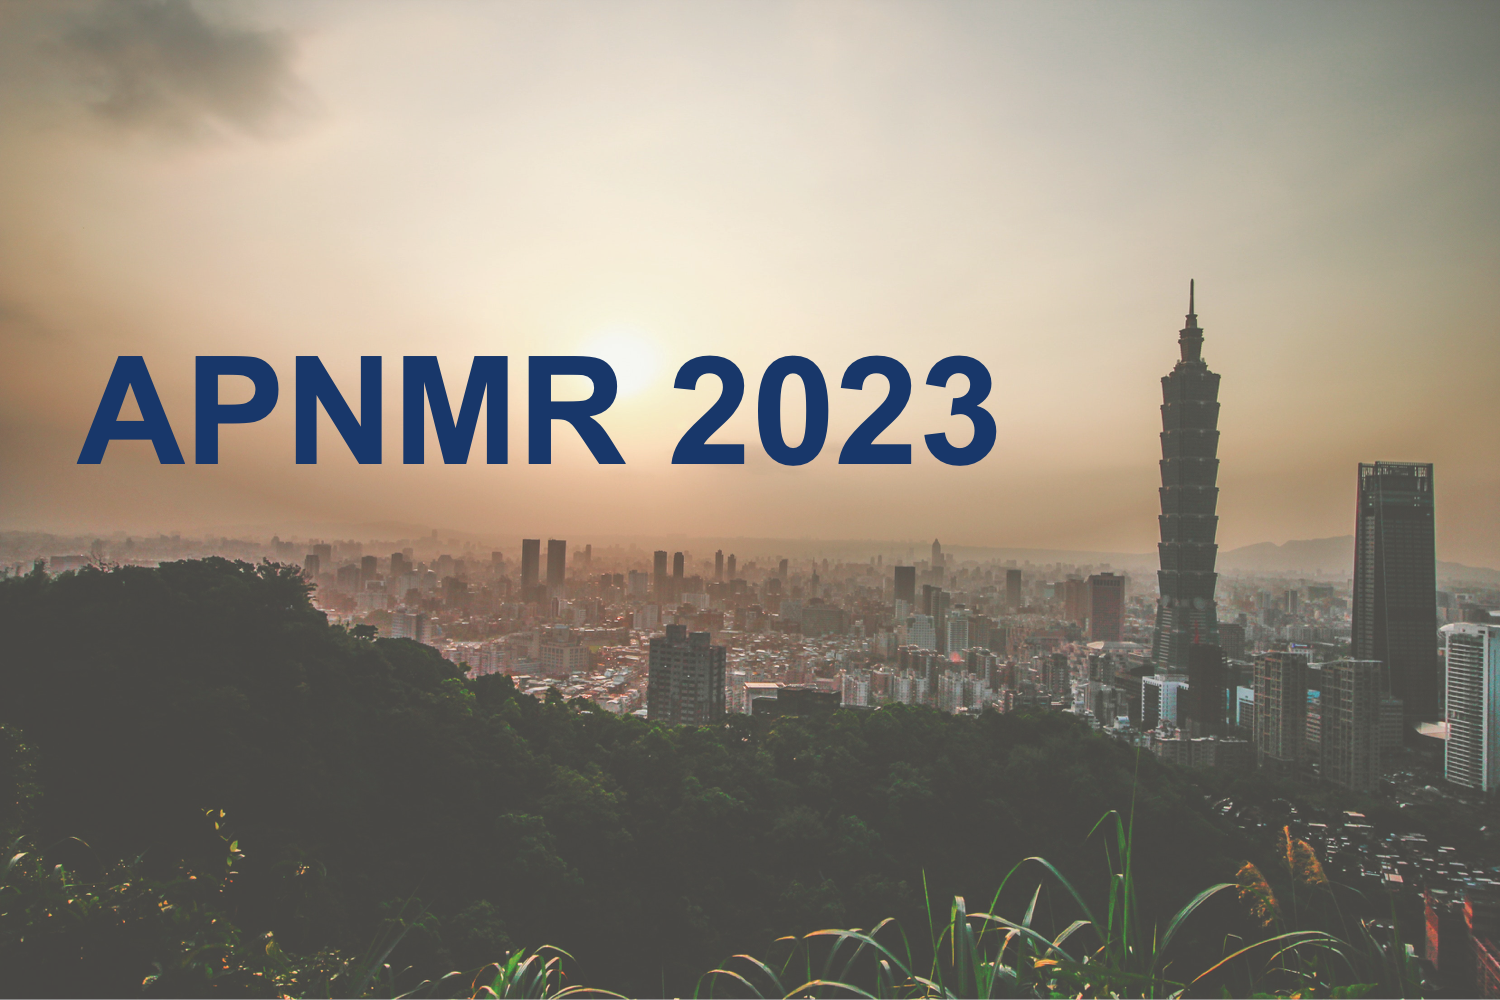 Upcoming conference APNMR2023 at Taipei